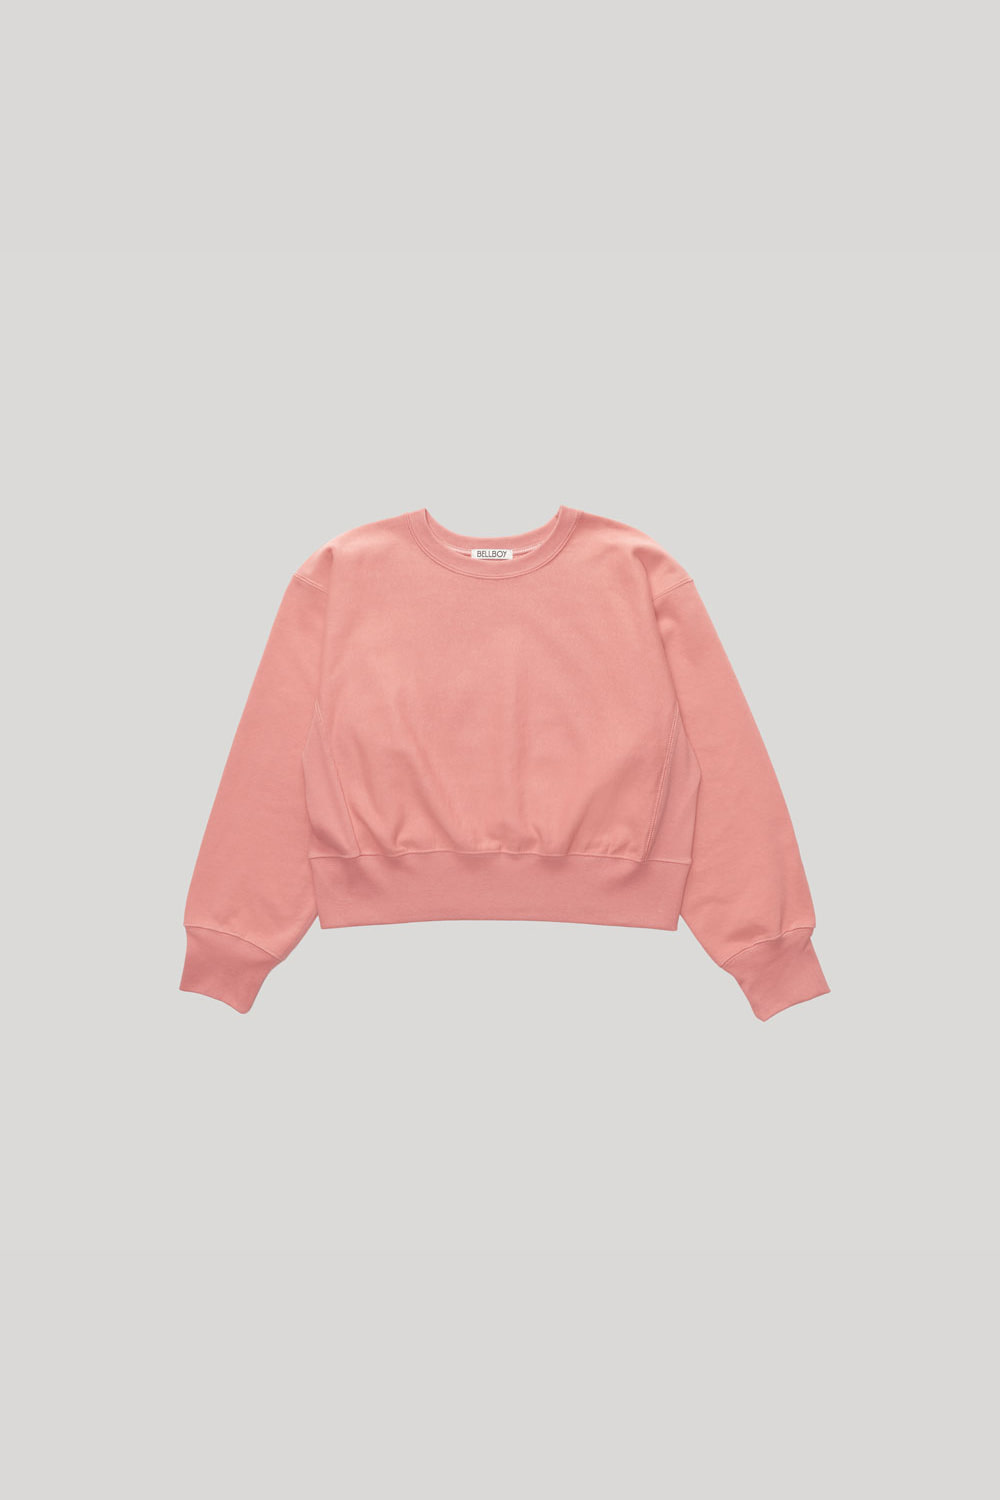 70&#039;s Sweatshirts - Part-Timer (Cropped) 티셔츠, 워시드 헤비웨이트 티셔츠, 옥스포드셔츠, 버튼다운셔츠, 메신저백, 캔버스백